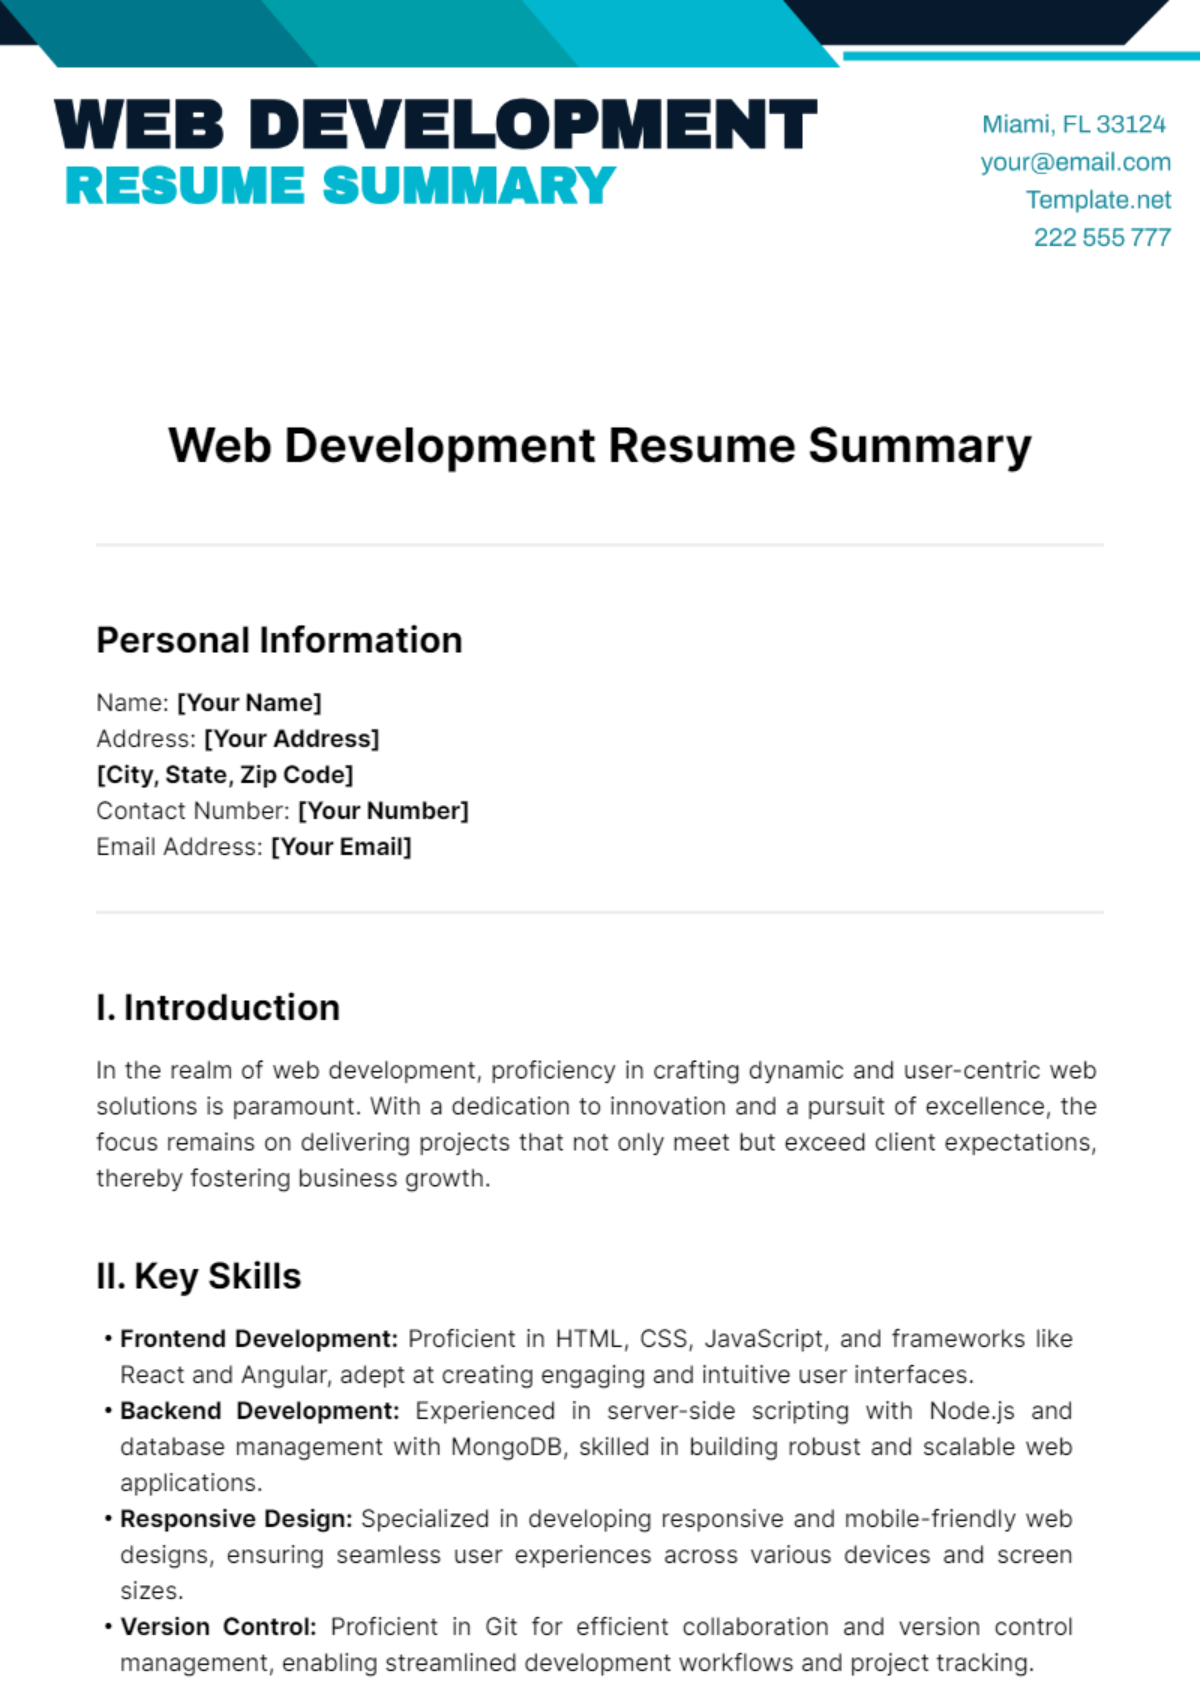 Web Development Resume Summary Template